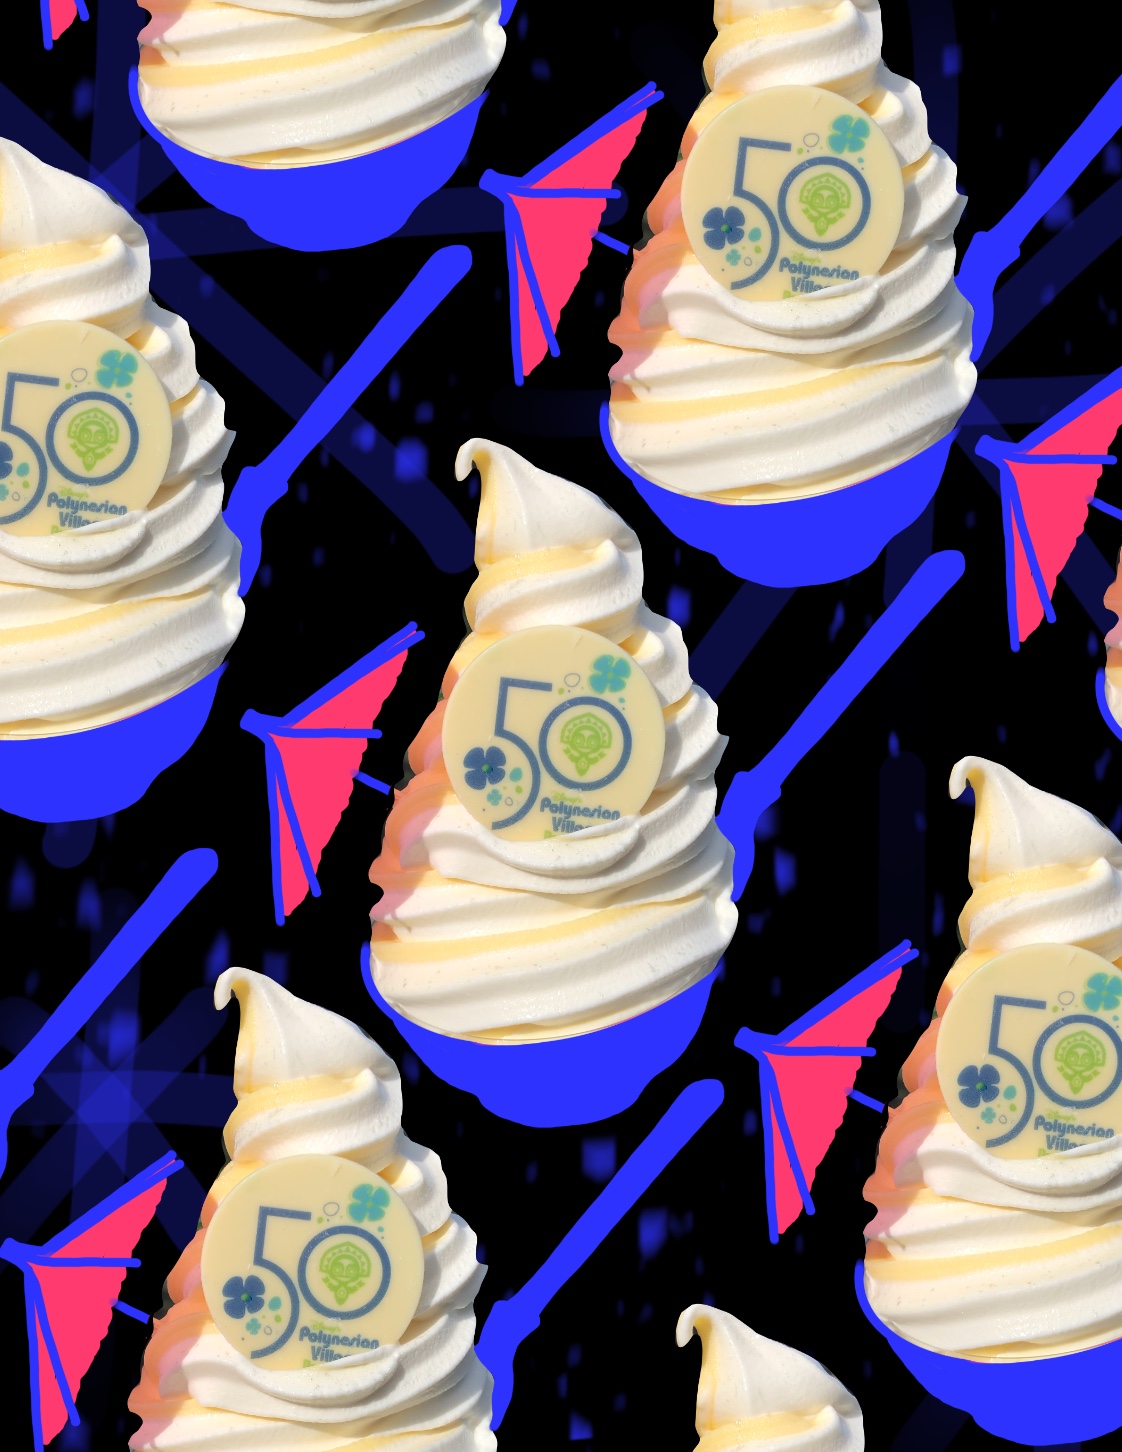 pattern of Dole Whip ice cream